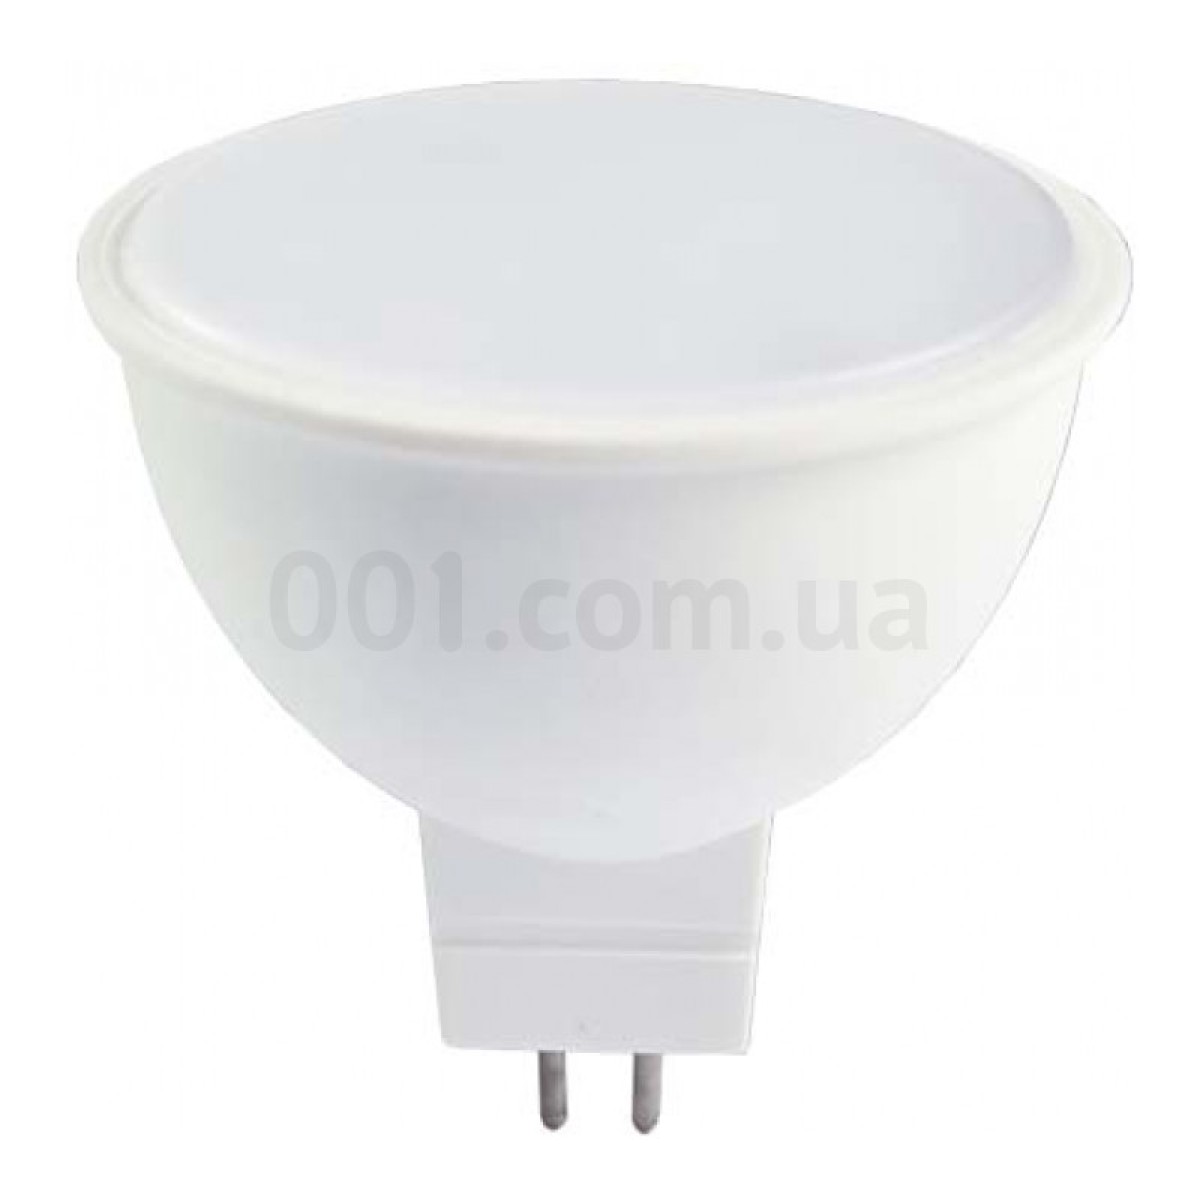 Светодиодная лампа LB-240 MR16 4Вт 2700K G5.3, Feron 256_256.jpg